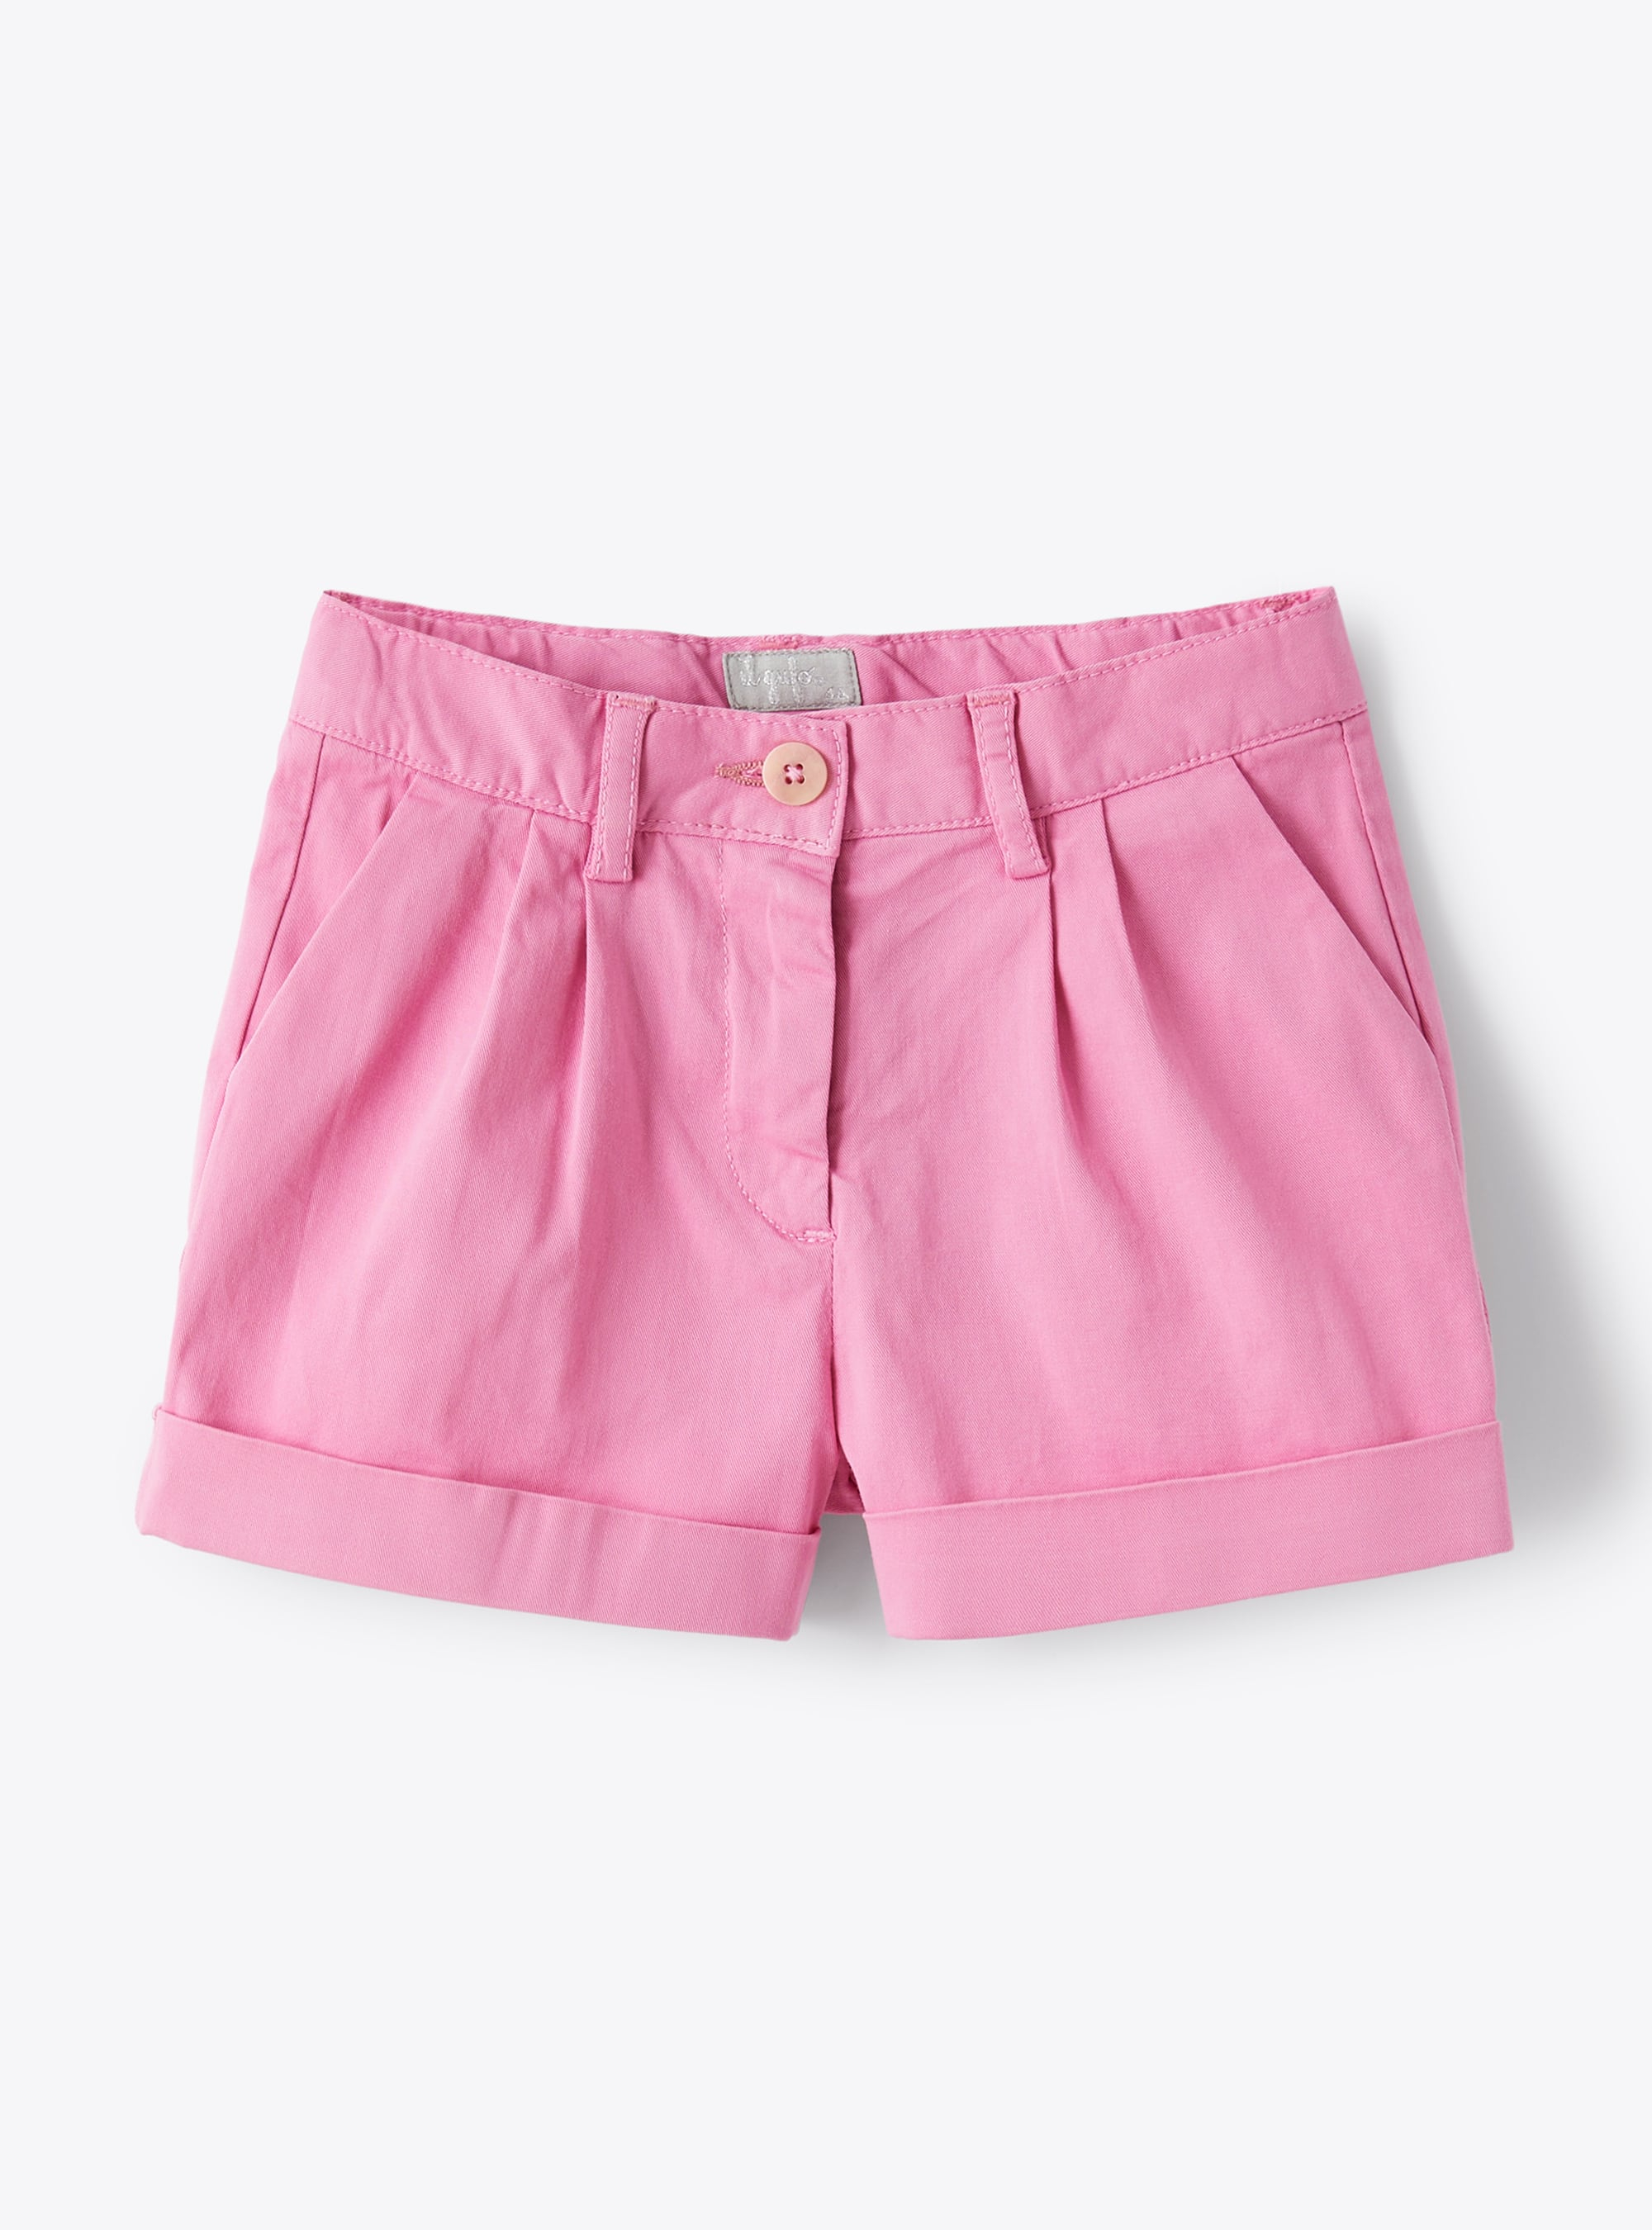 Bermuda shorts in pink cotton gabardine - Pink | Il Gufo